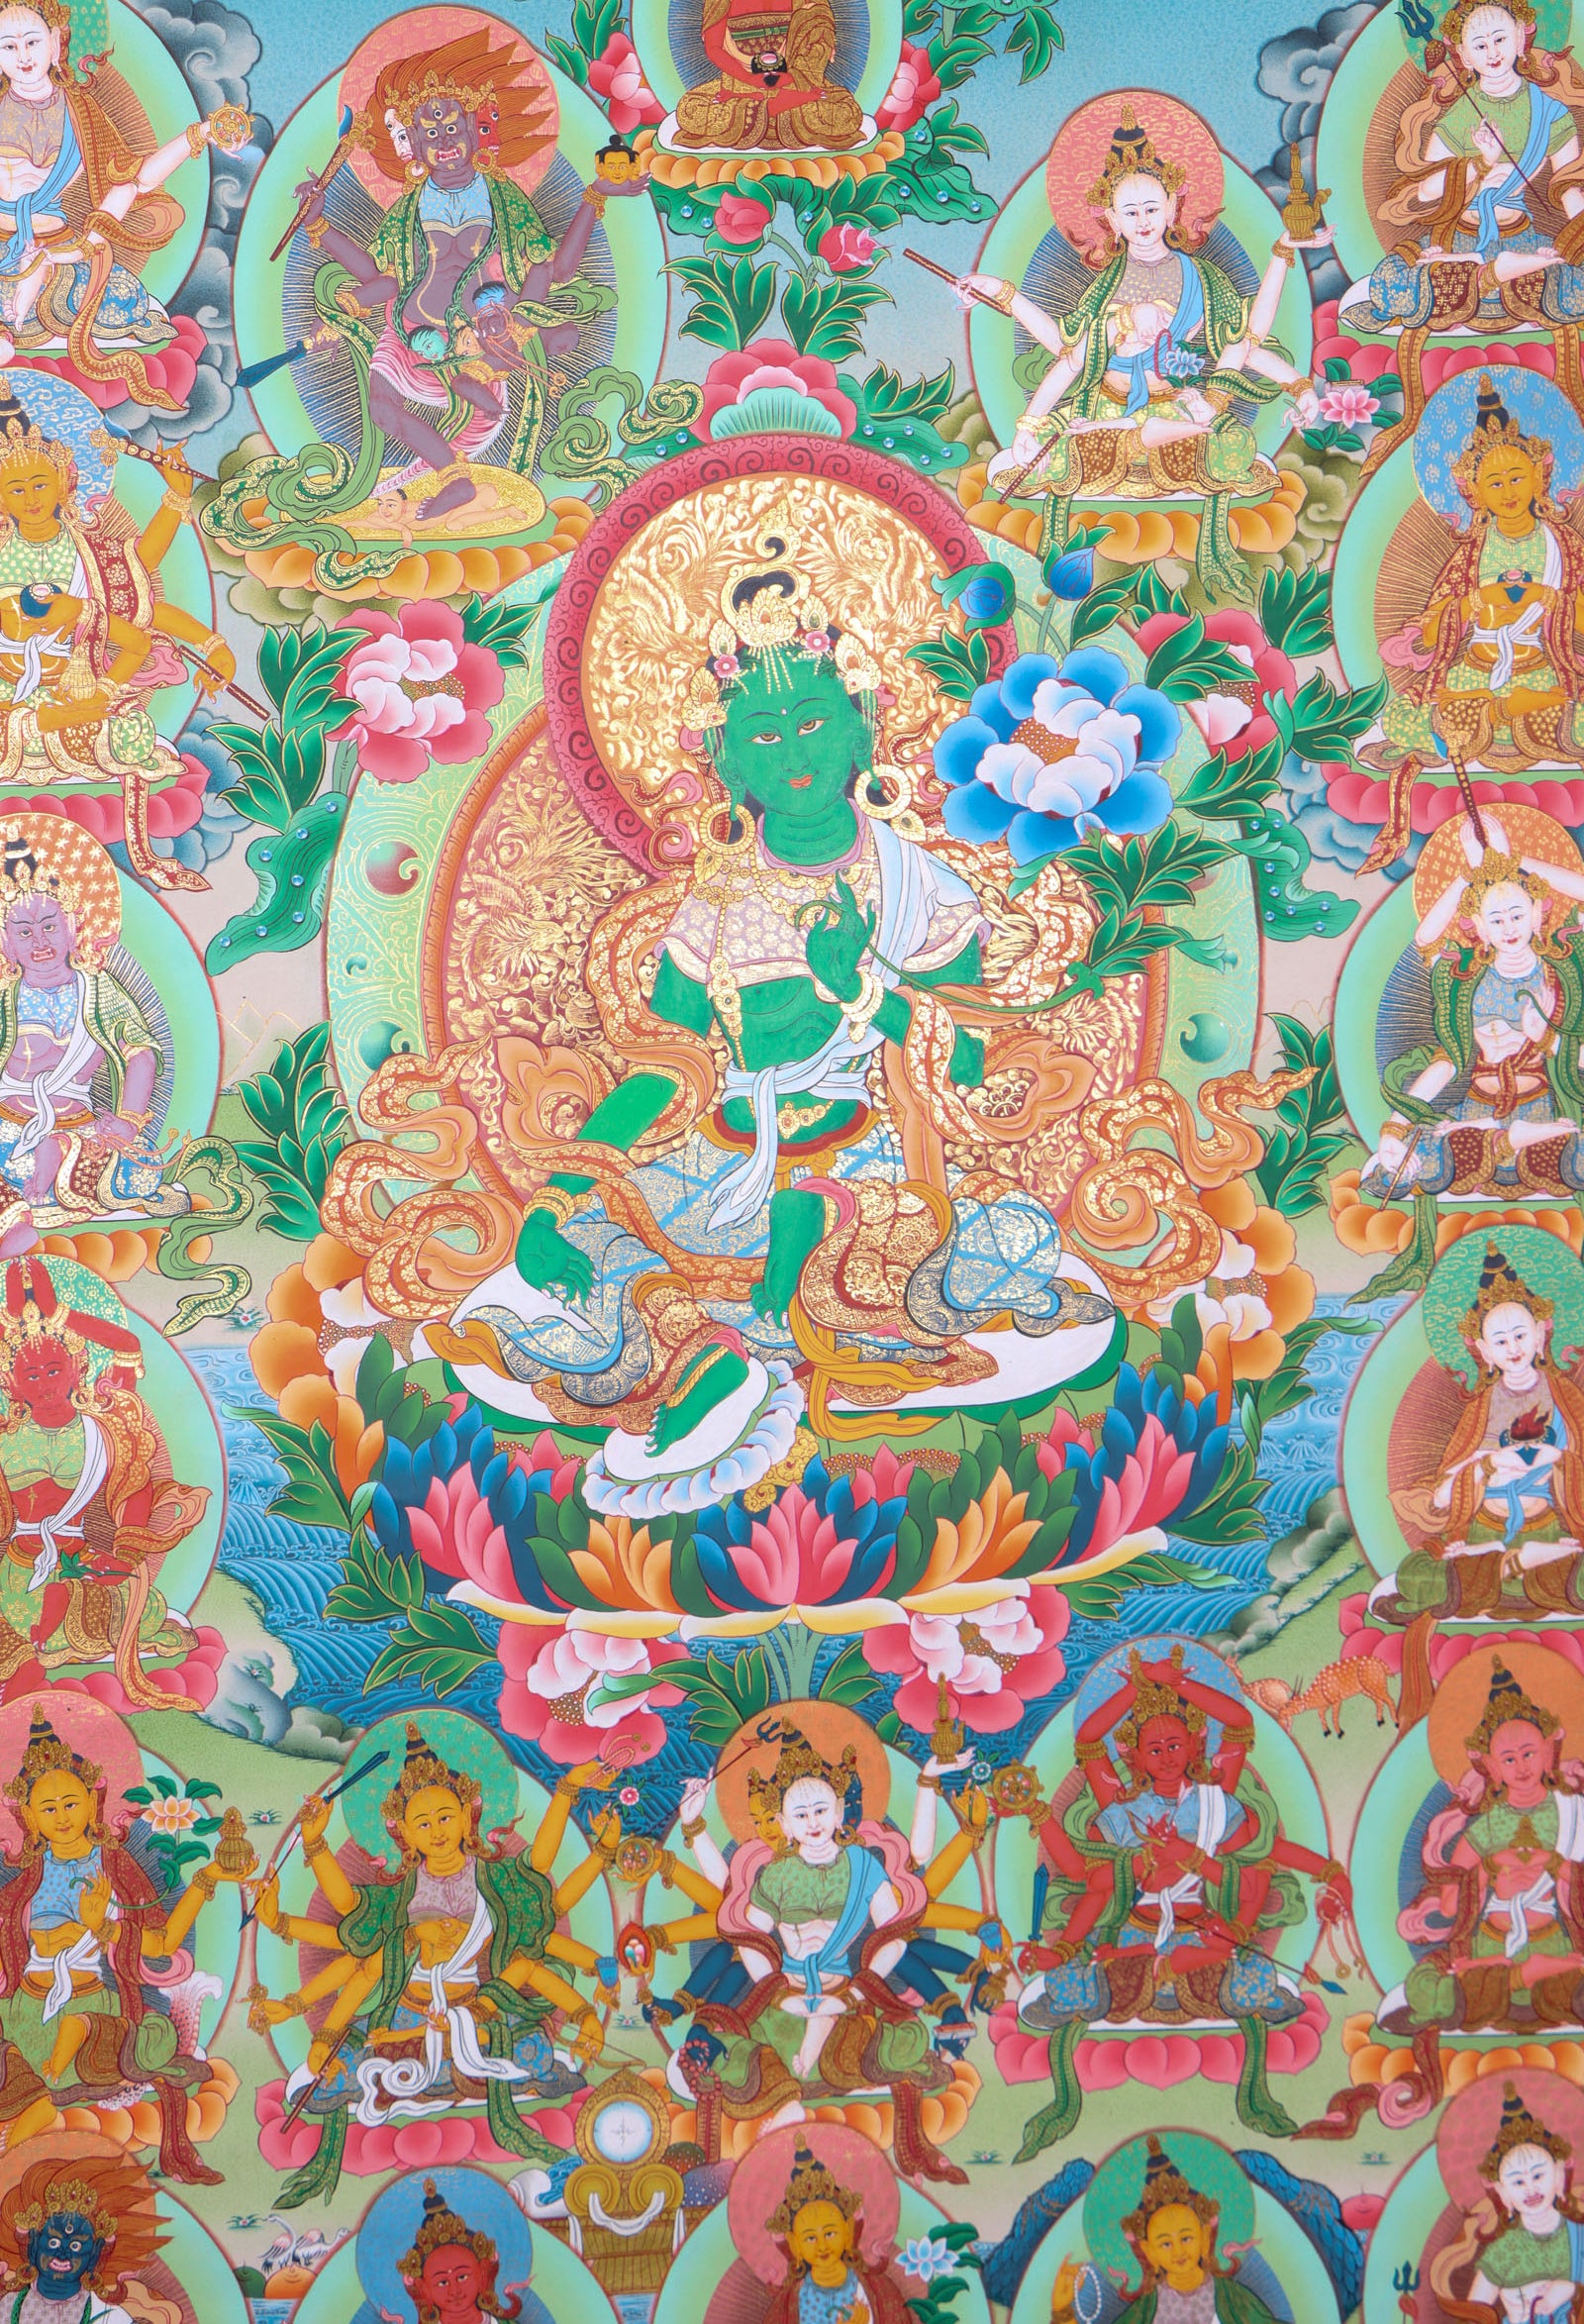 21 Tara Thangka Painting for prayer and devotion.